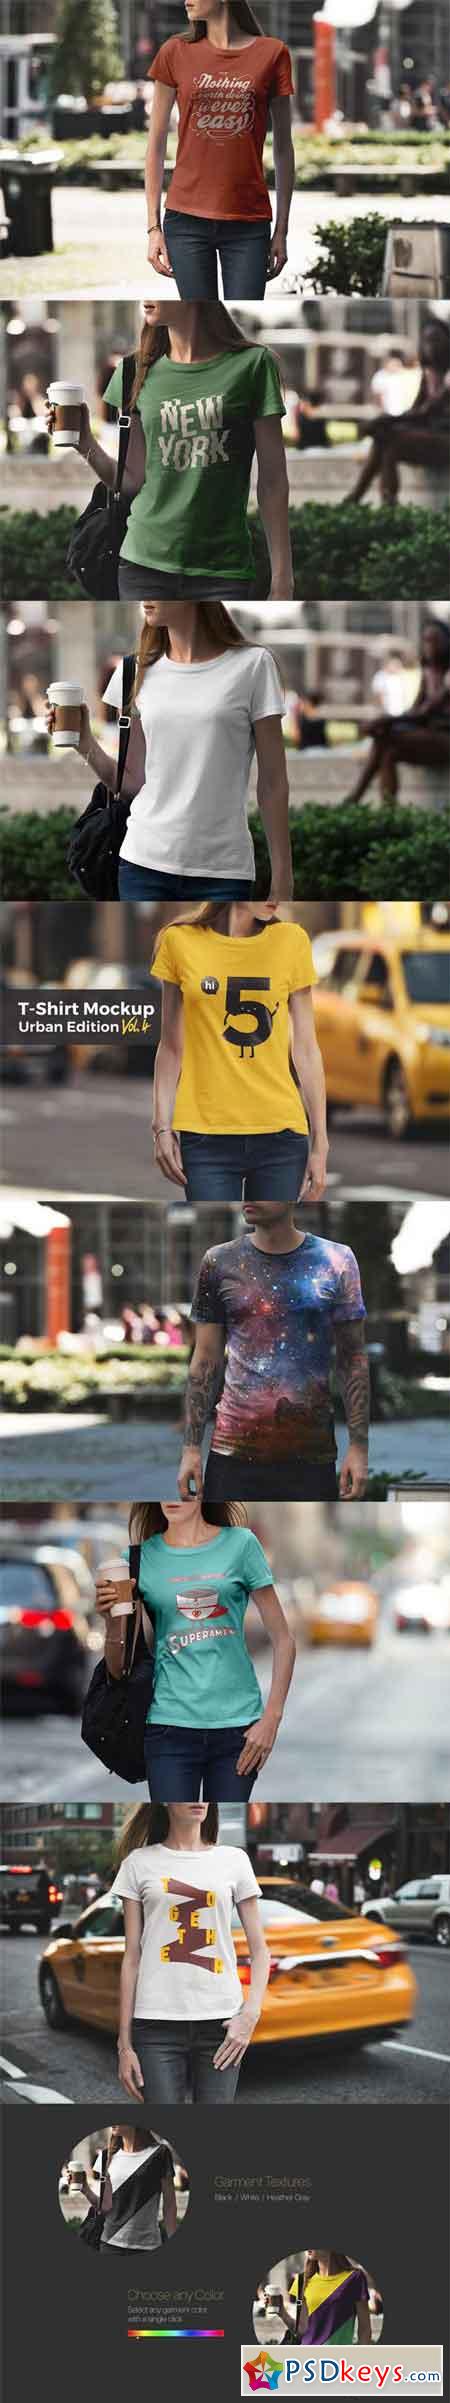 T-Shirt Mockup Urban Edition Vol. 4